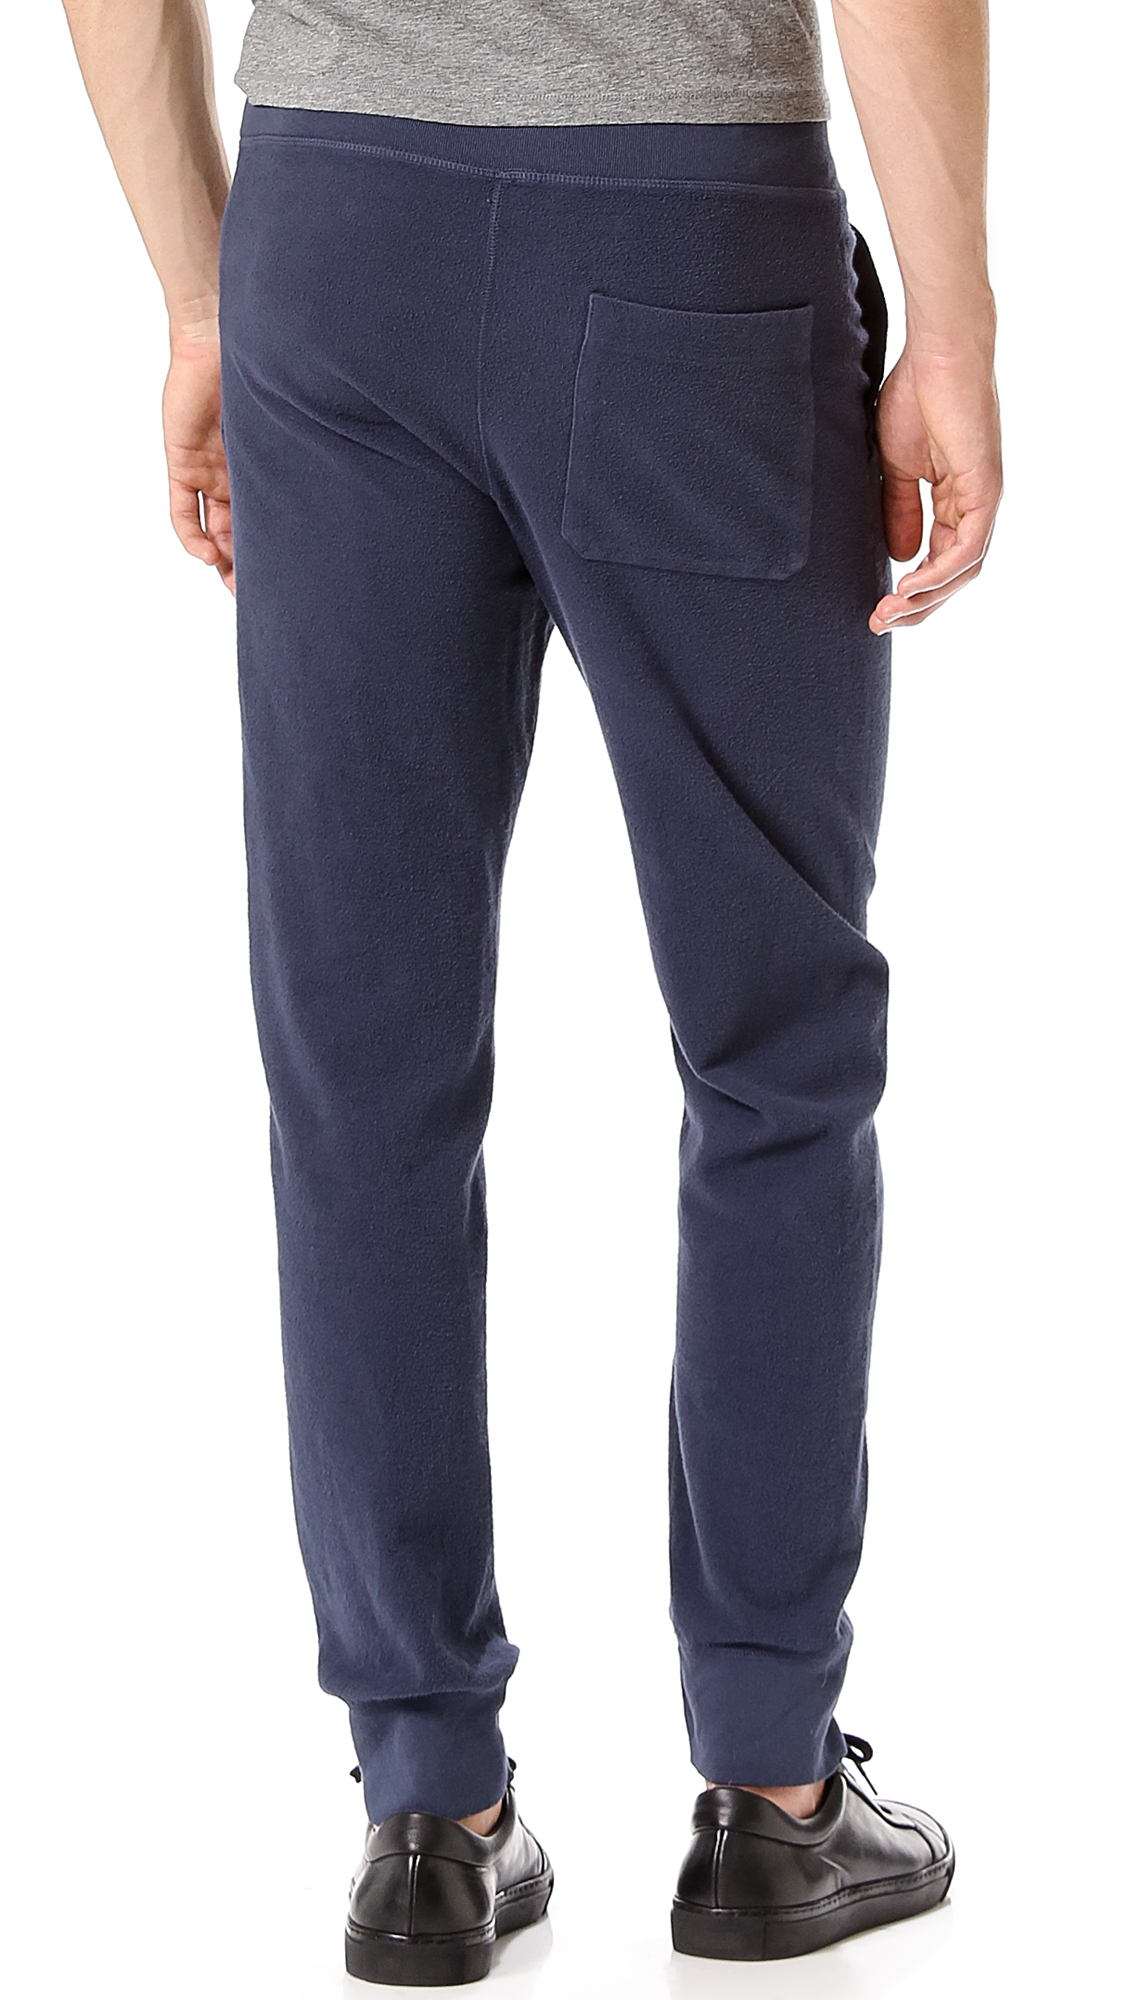 Lyst - Save Khaki Sweatpants in Blue for Men